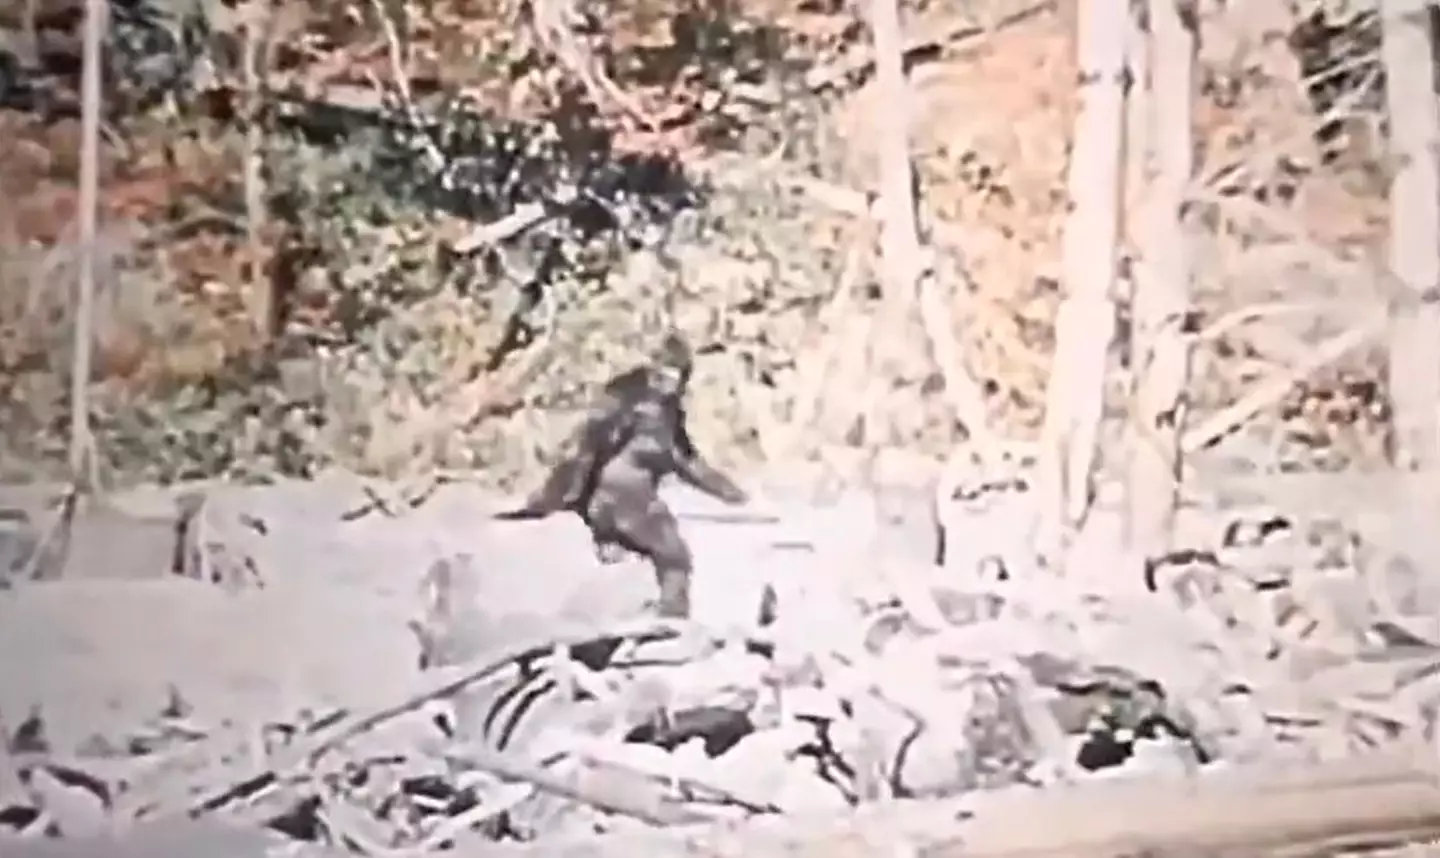 The footage of Bigfoot was originally shot in 1967.